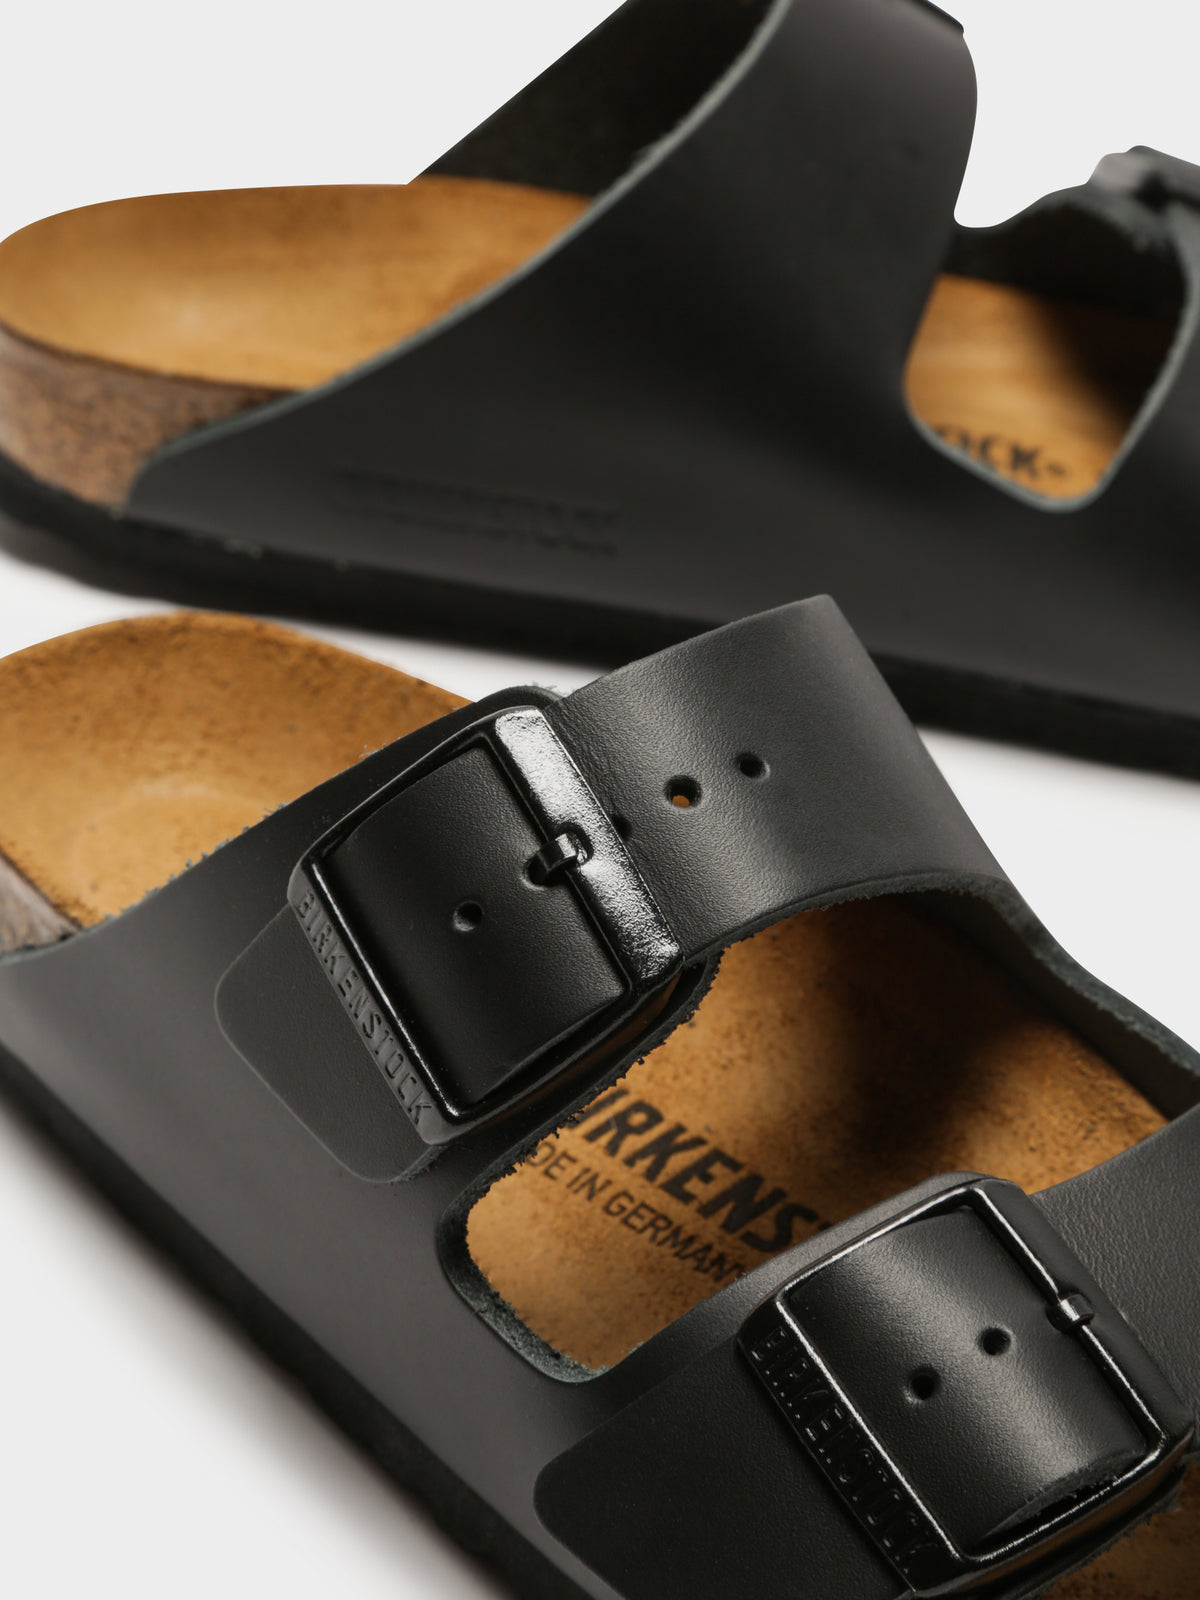 Unisex Arizona Smooth Leather Narrow Sandals in Black